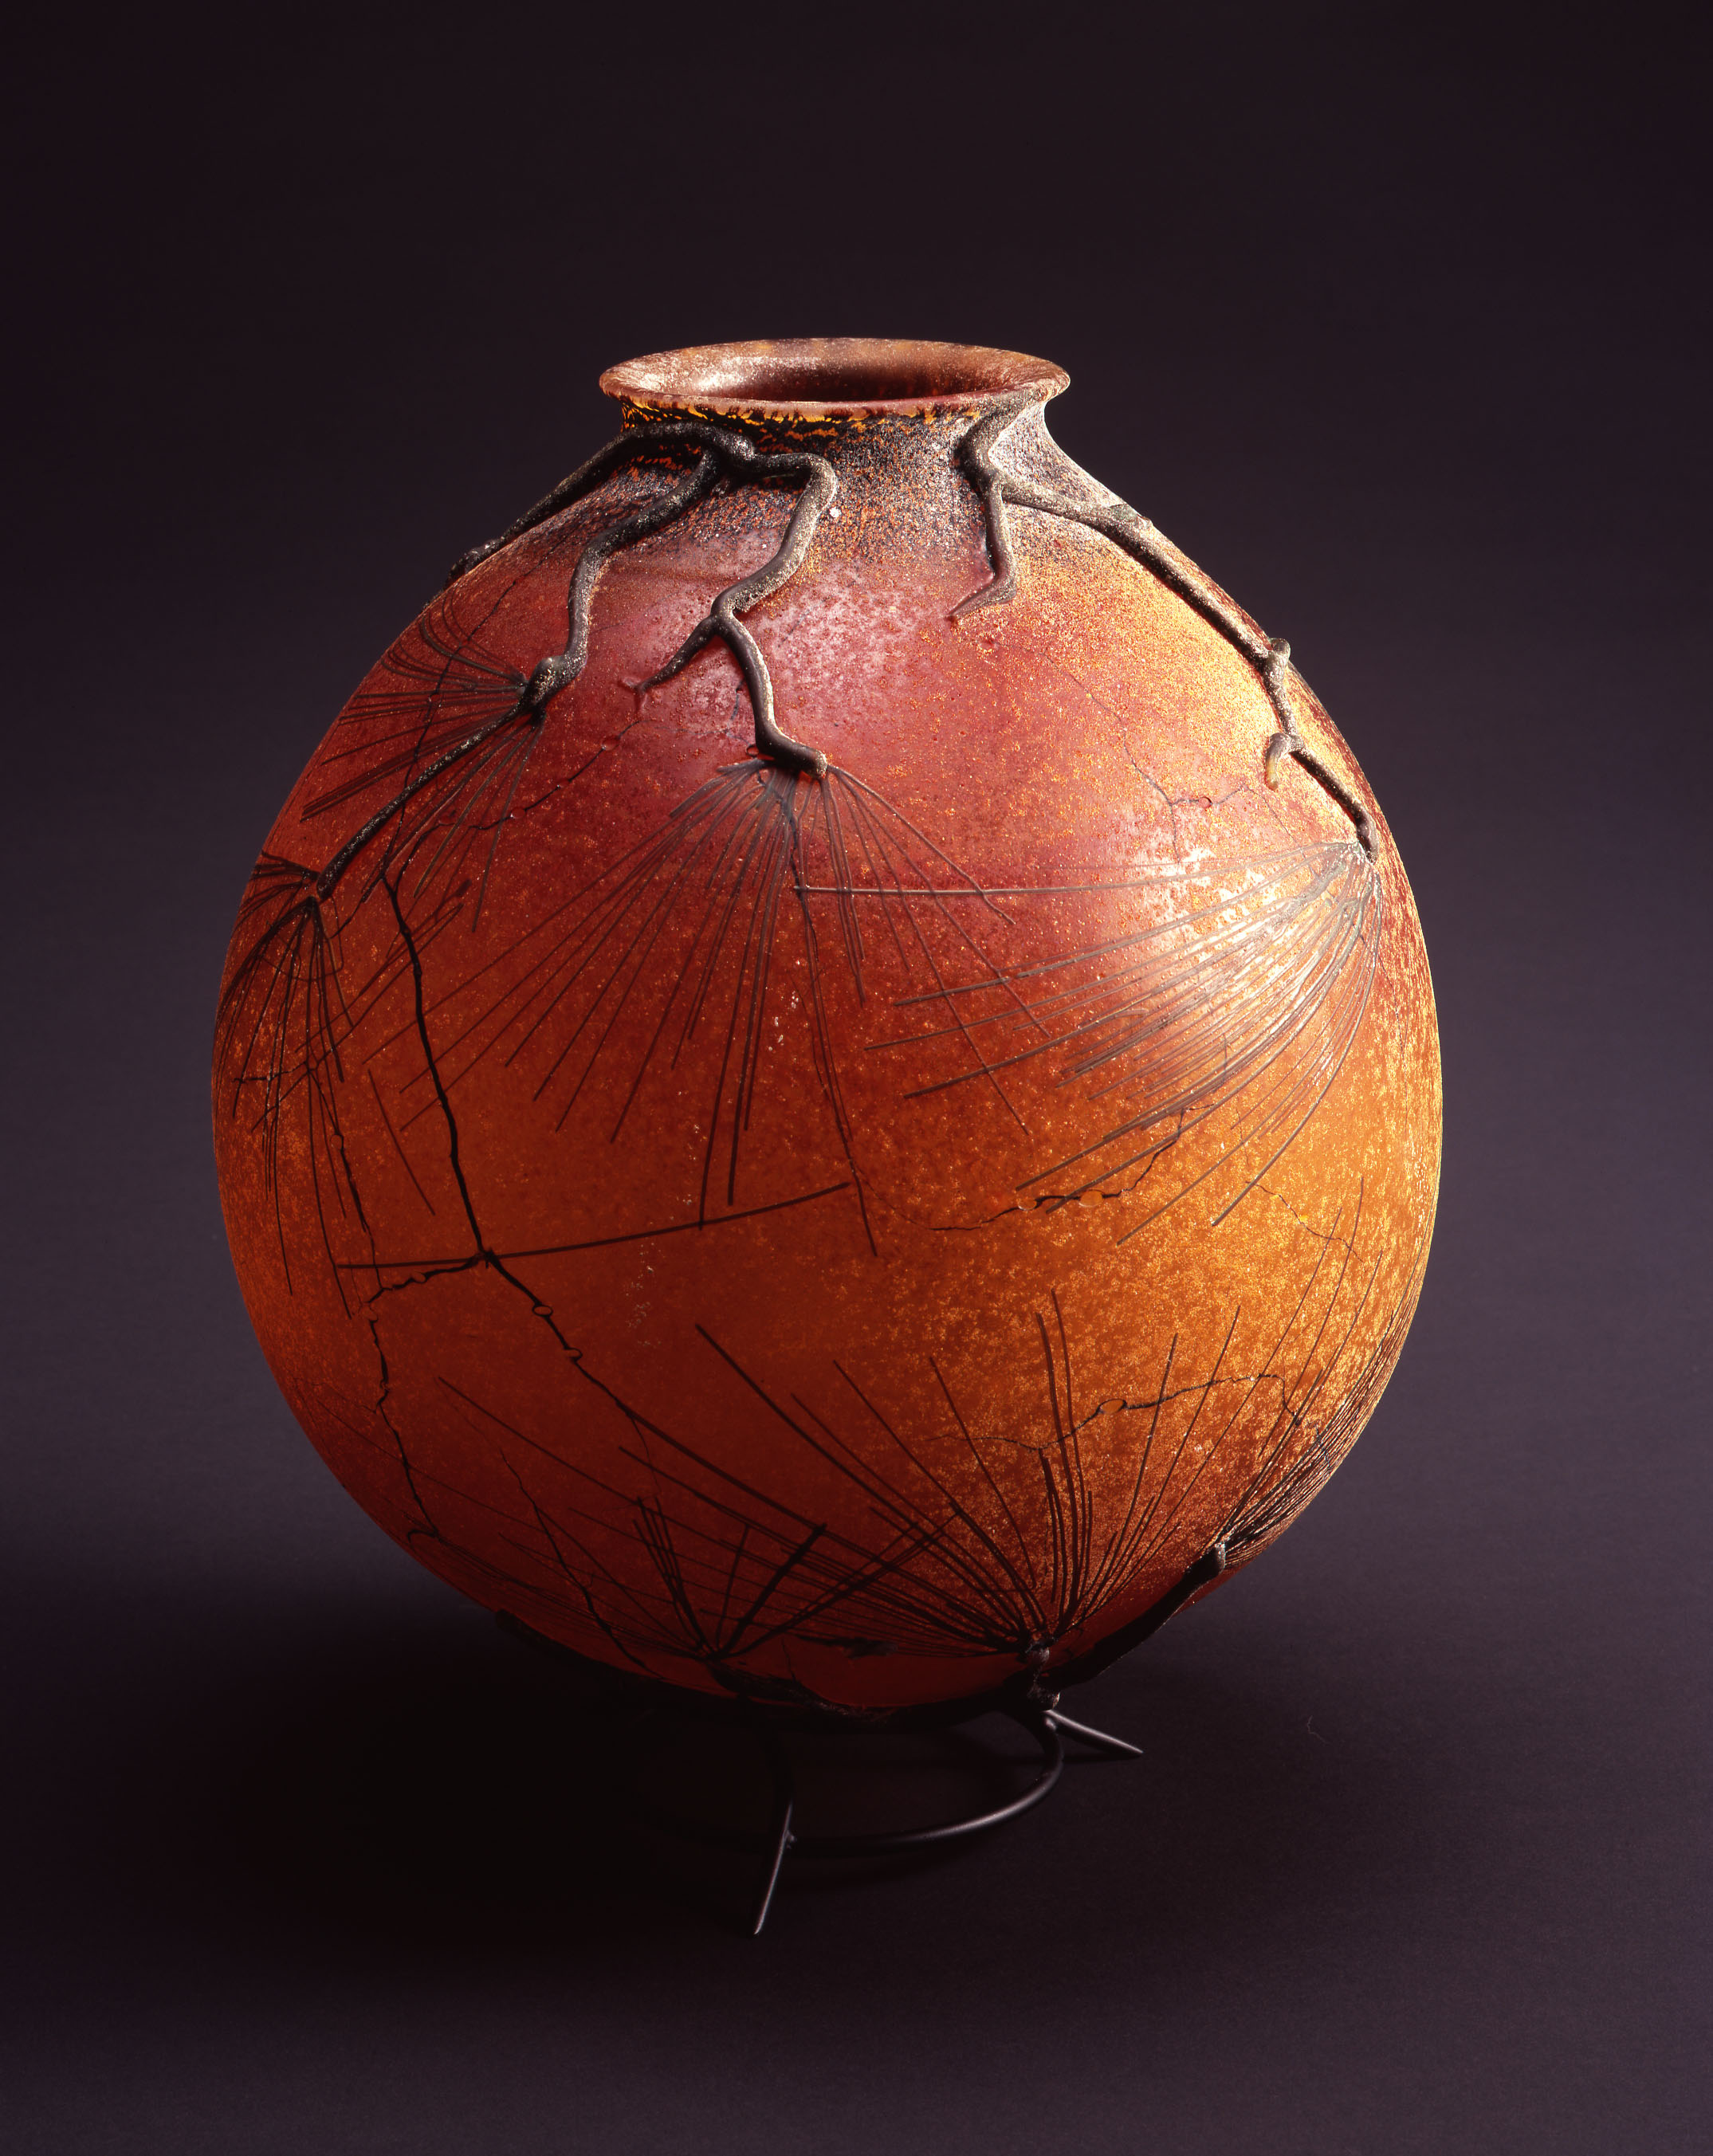  William Morris,  Globe Vessel with Ponderosa Pine Boughs&nbsp; (2004, glass, 14 1/8 x 12 x 12 inches), WM.41 